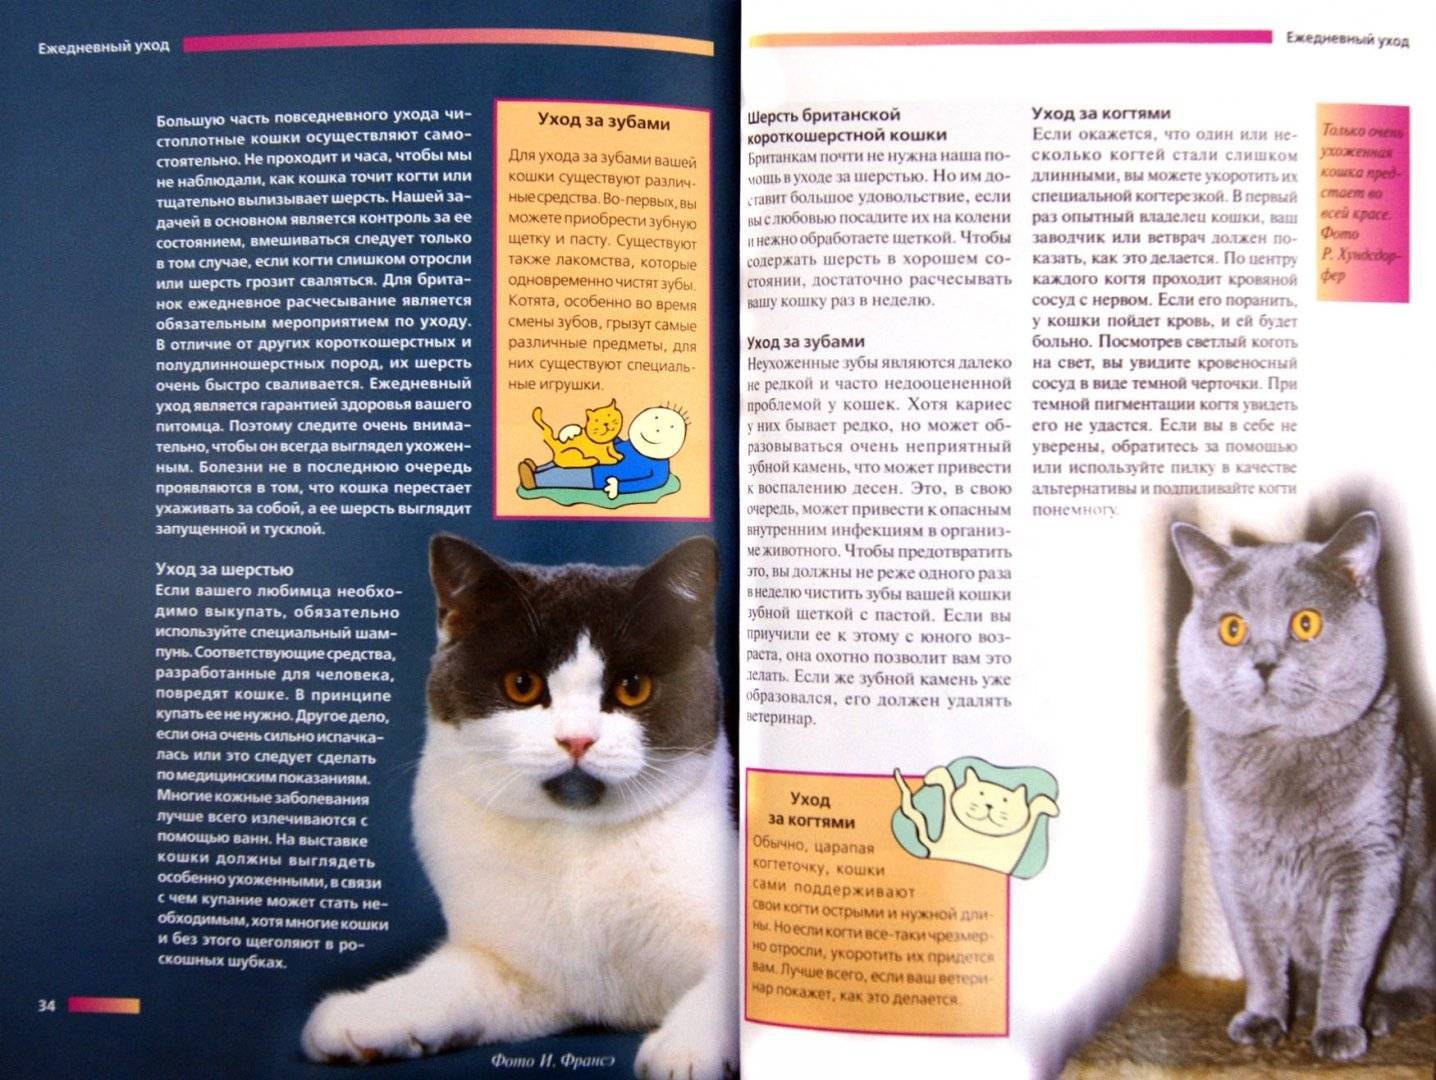 Нибелунг: кошки и коты